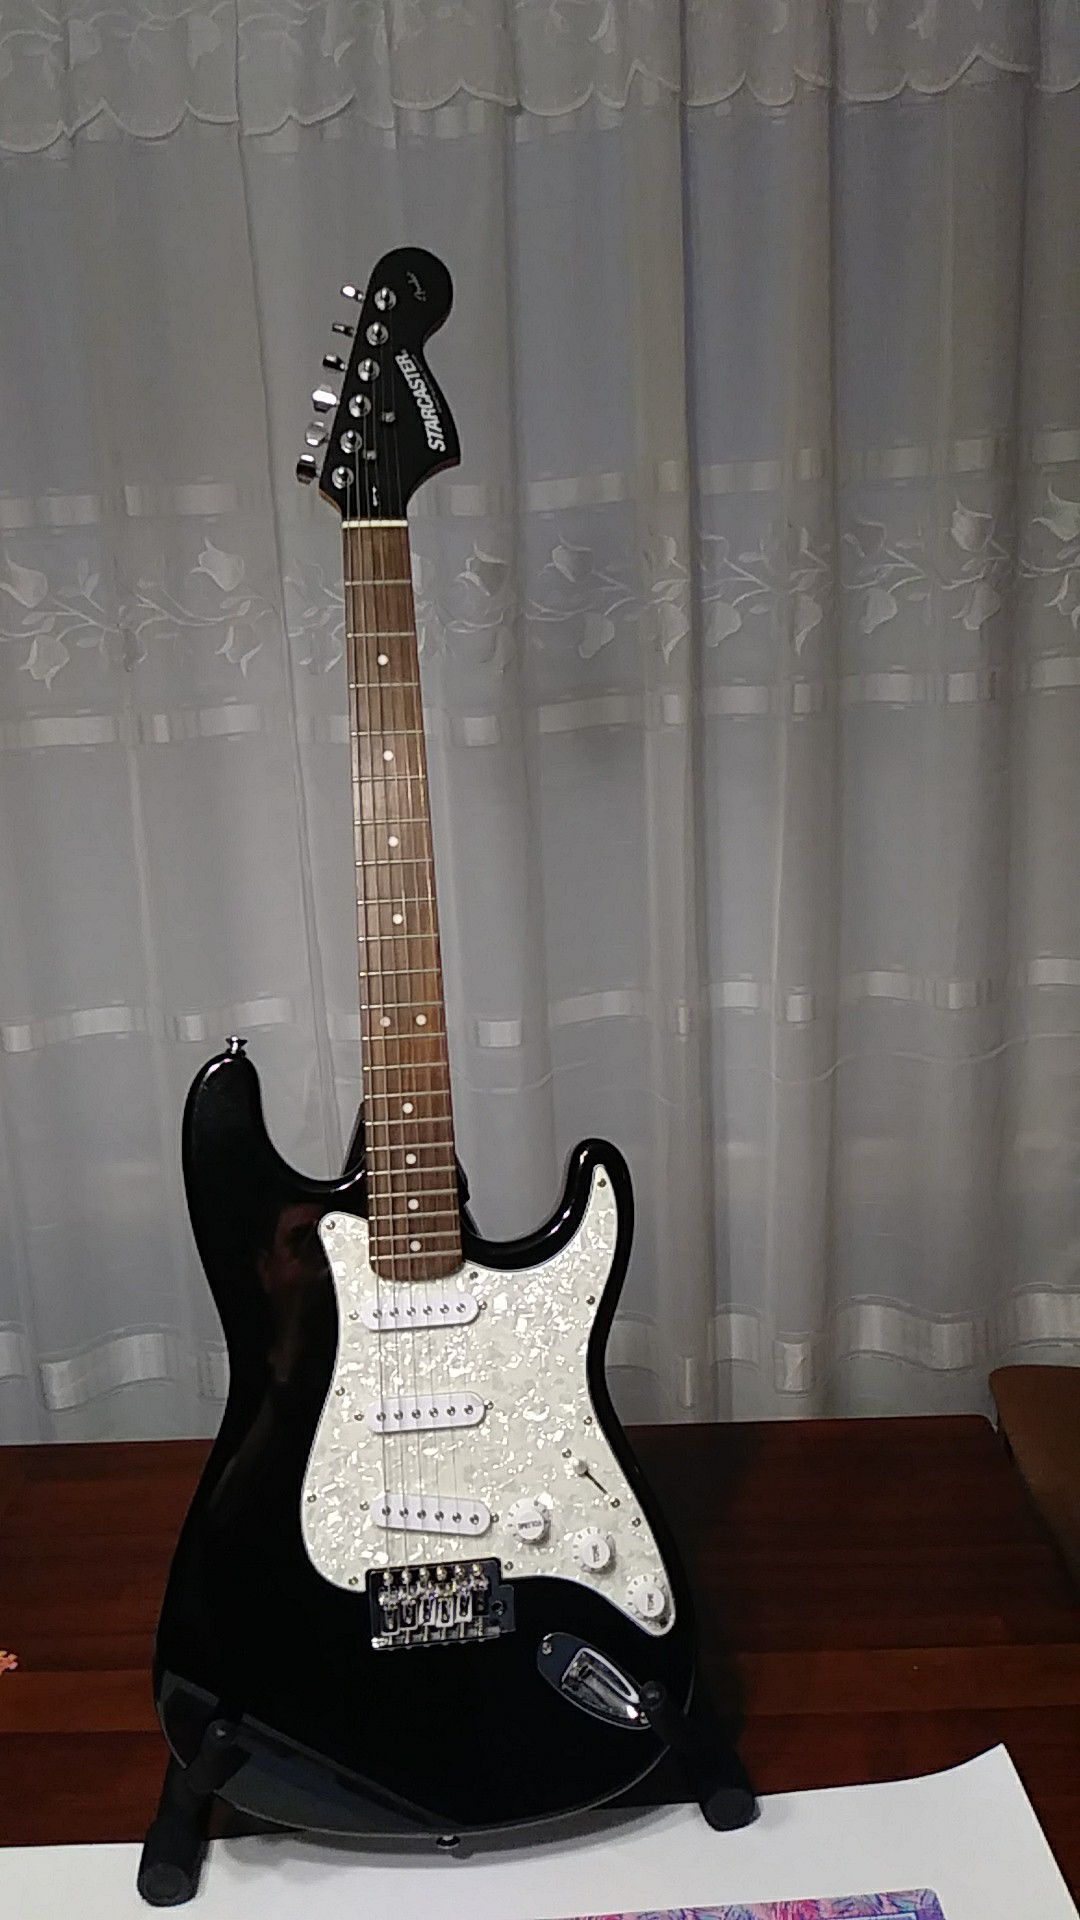 Fender Starcaster electric guitar.